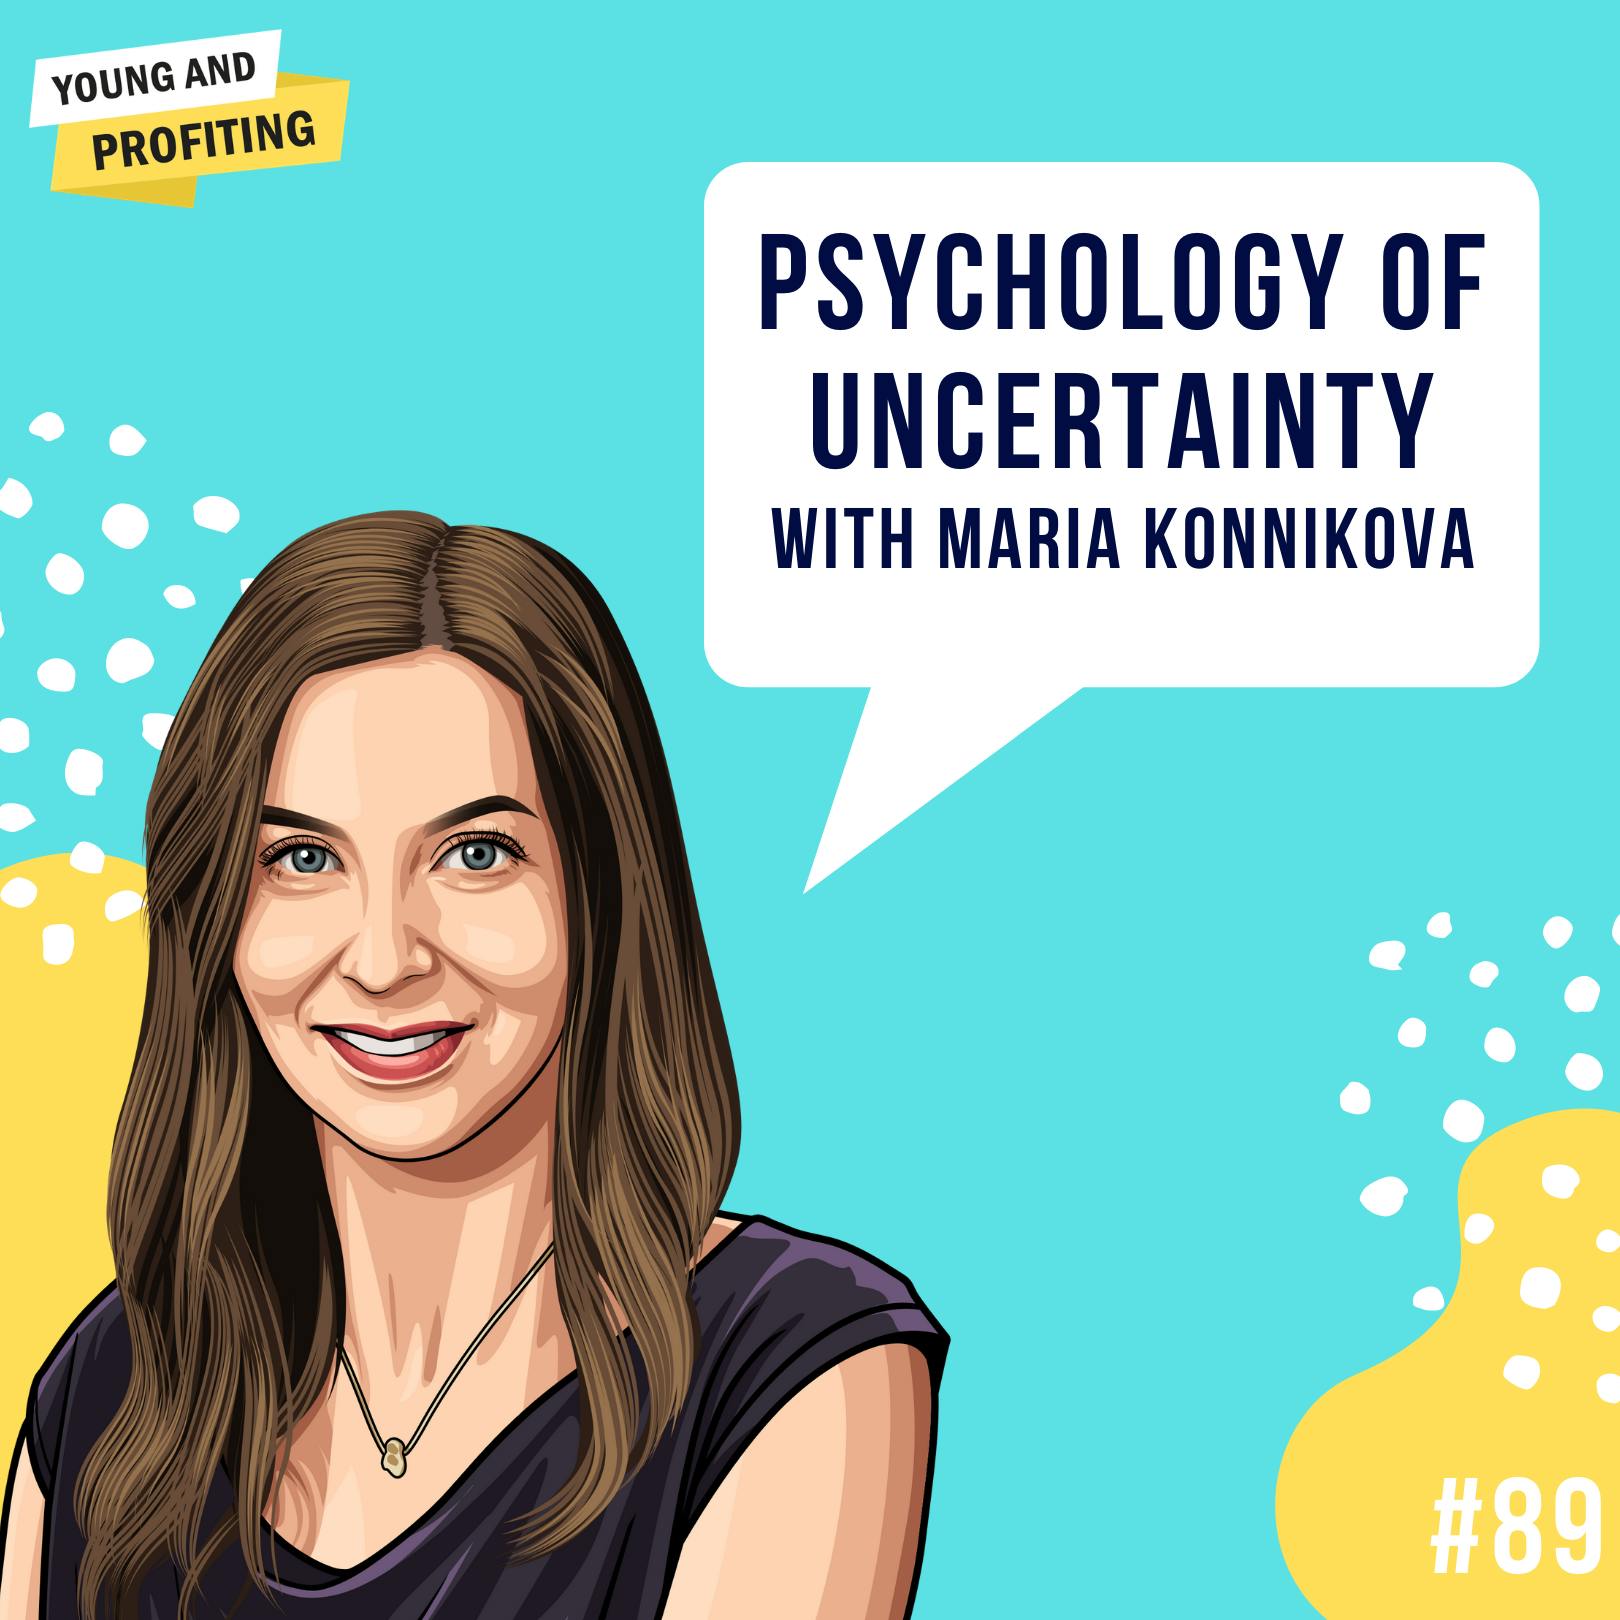 Maria Konnikova: Poker and the Psychology of Uncertainty | E89 by Hala Taha | YAP Media Network